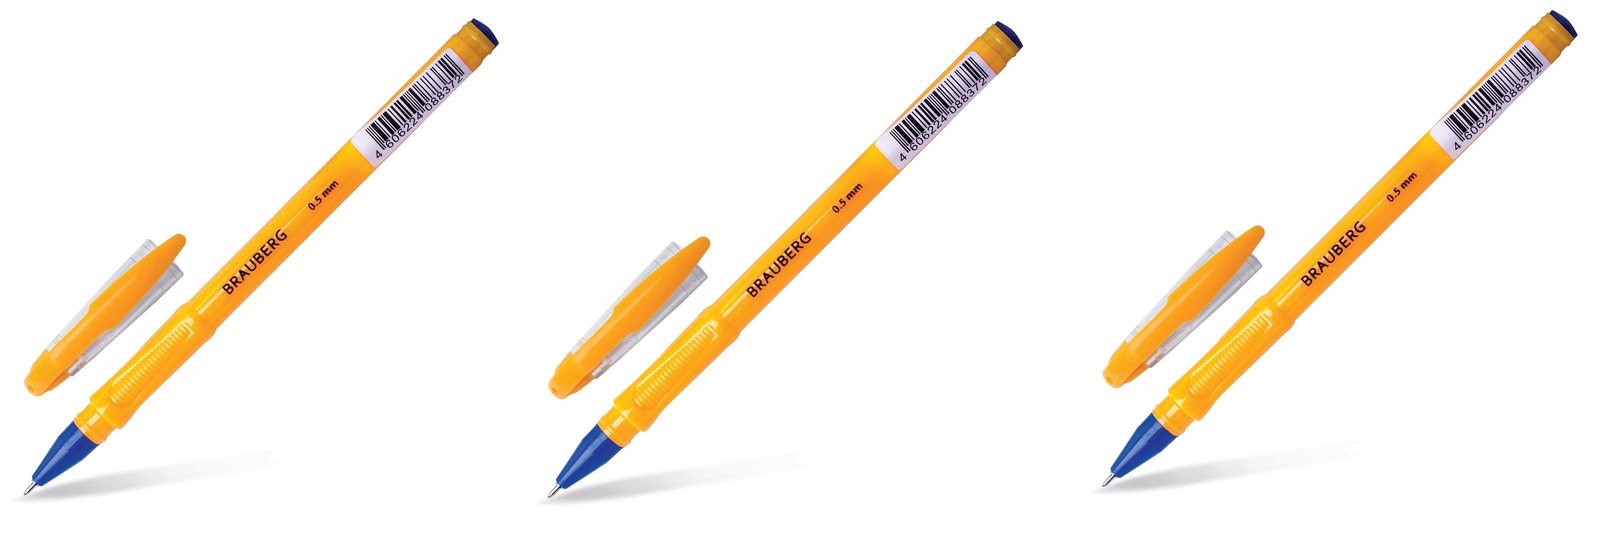 Brauberg 0.7. Ручка БРАУБЕРГ 0.7 масляная. Ручка BRAUBERG 0.7 мм. Ручка масляная БРАУБЕРГ 0,5. Ручка БРАУБЕРГ масляная синяя корпус оранжевый.